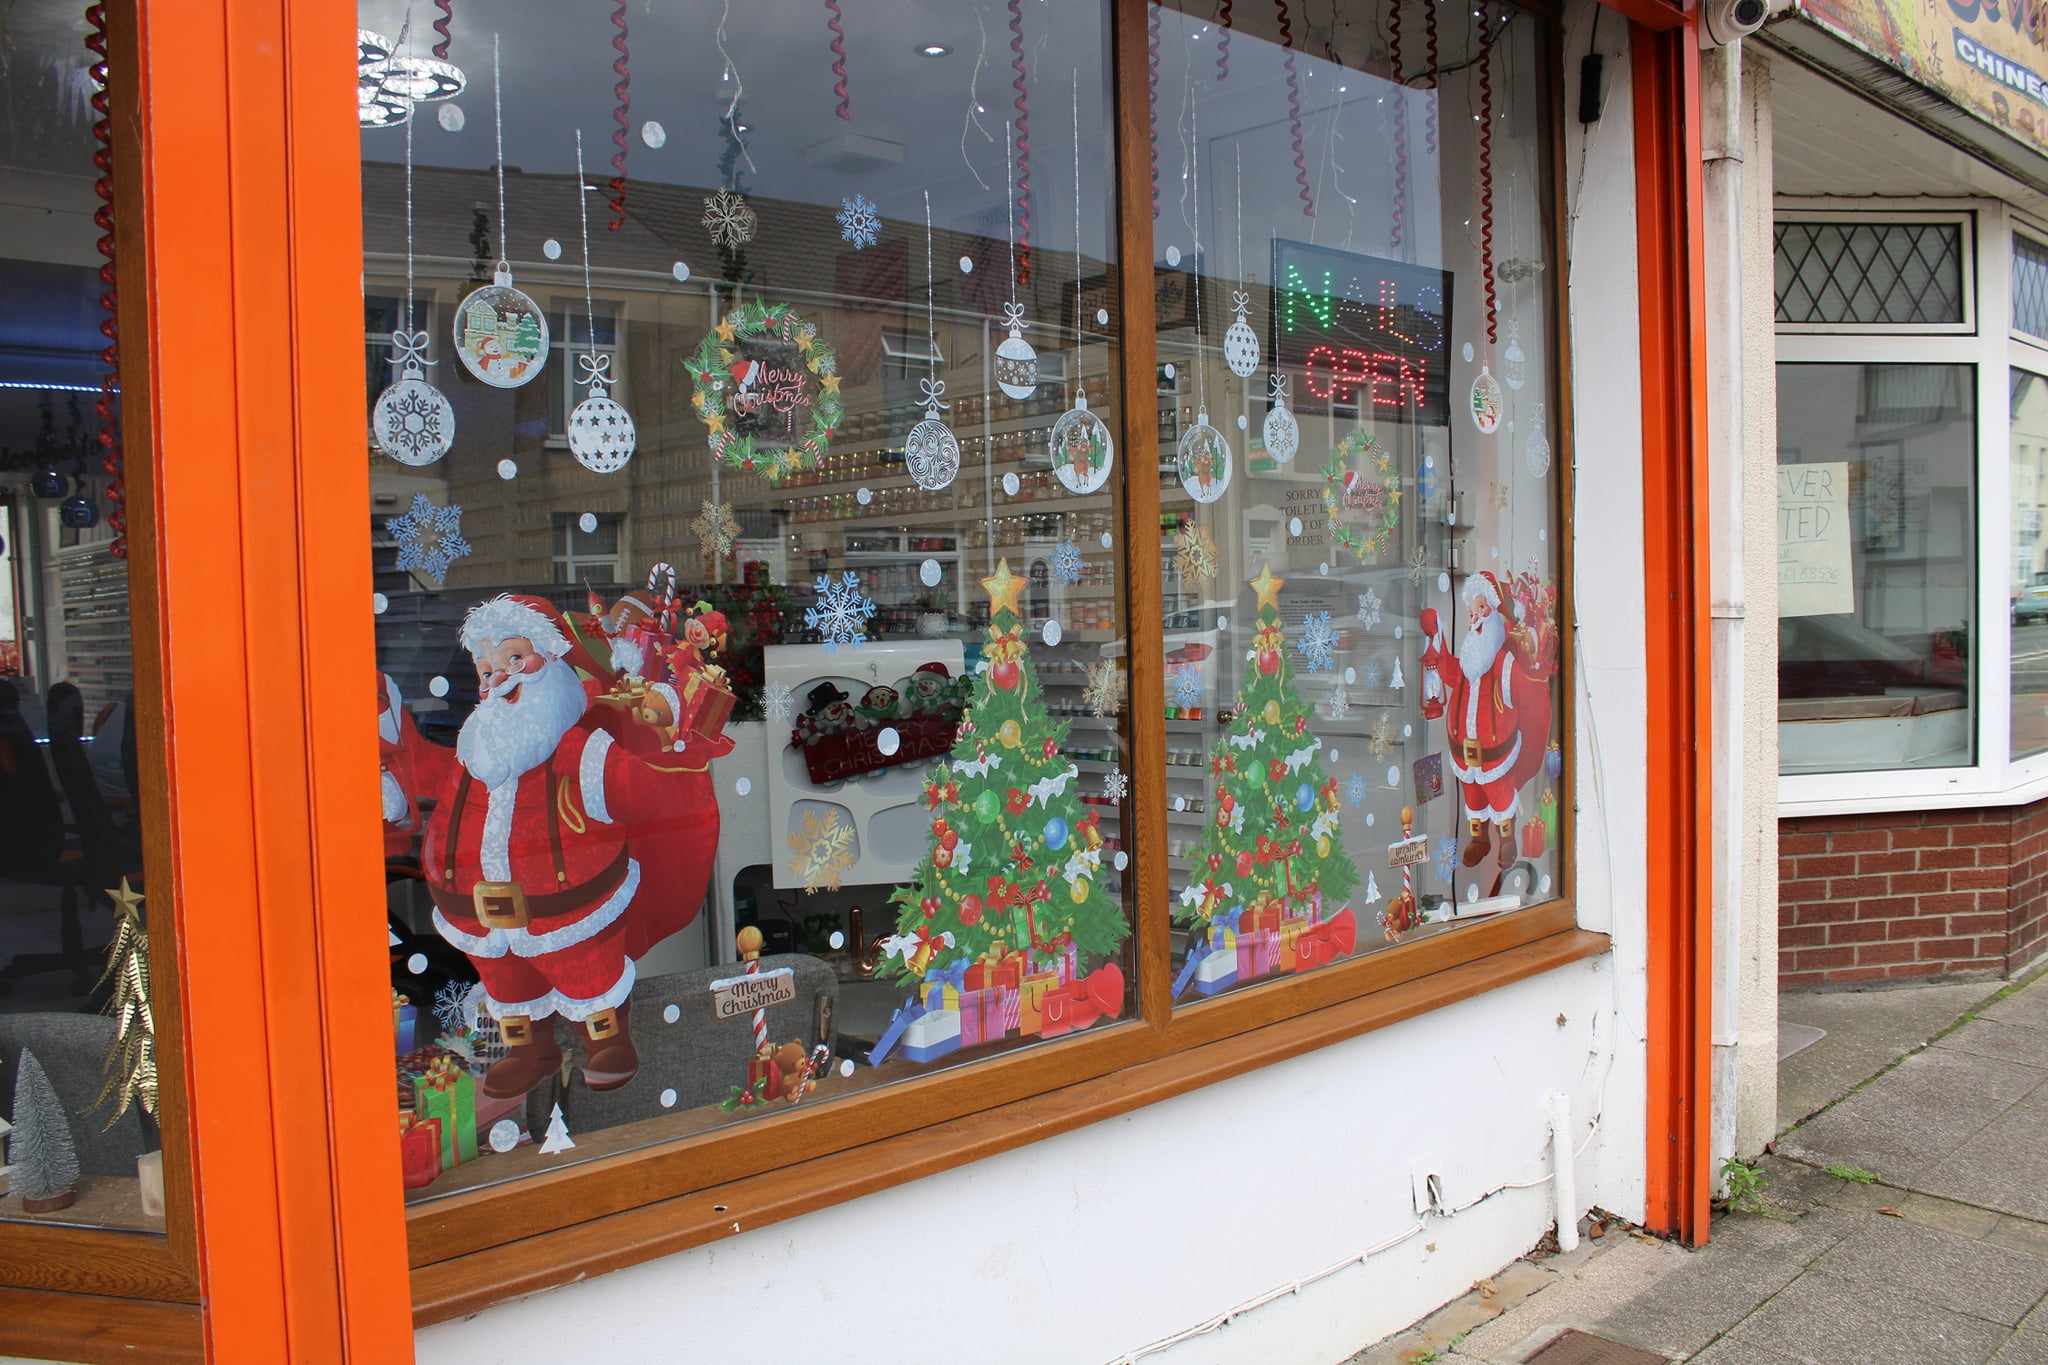 Texas Nails Christmas shop window, santa, decorations and christmas trees